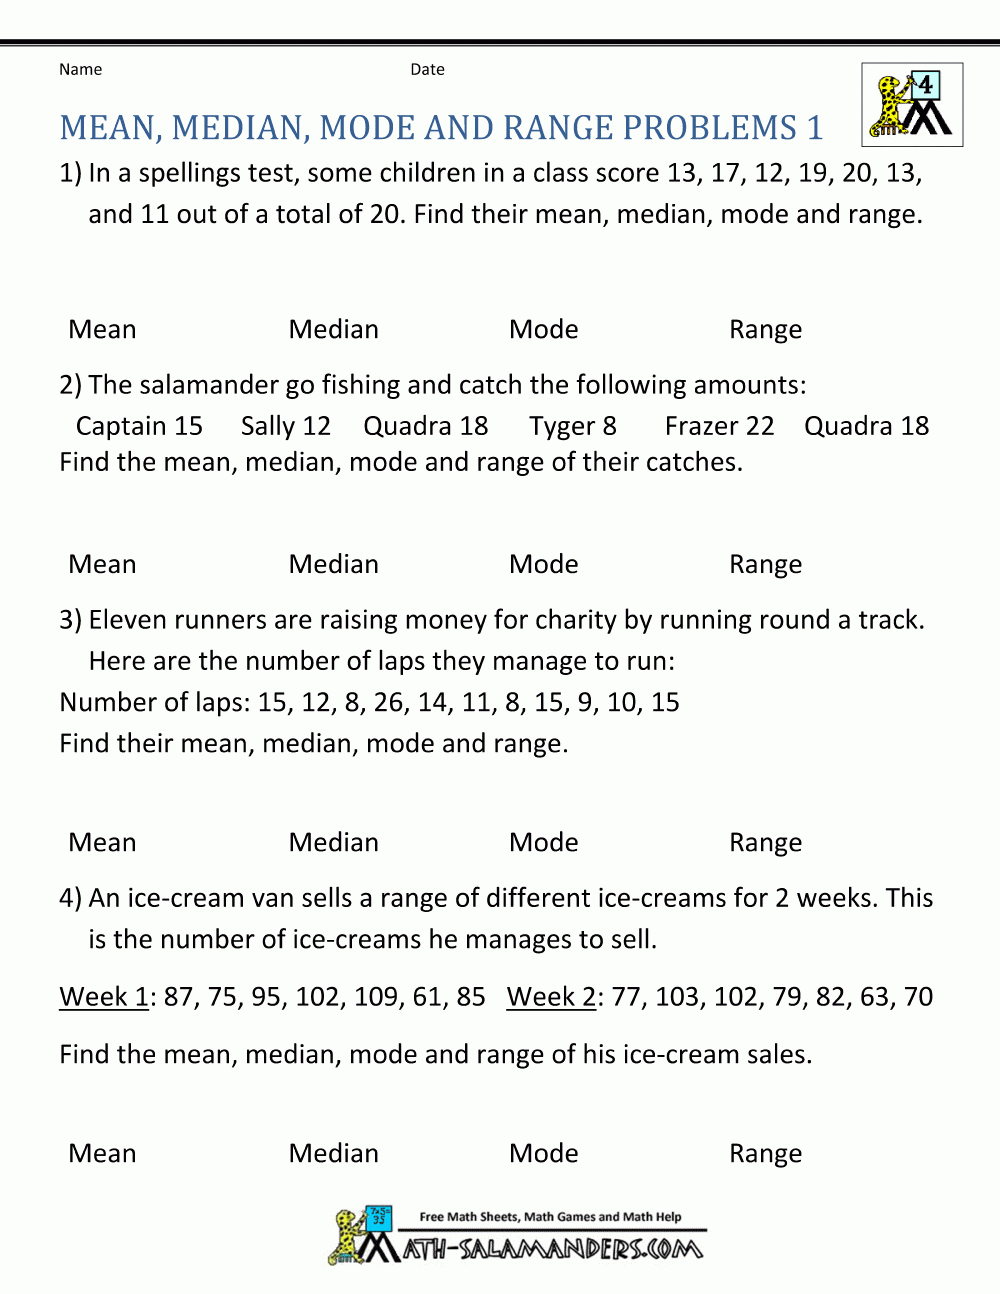 Mean Median Mode Range Worksheets As Well As Mean Mode Median And Range Worksheet Answers